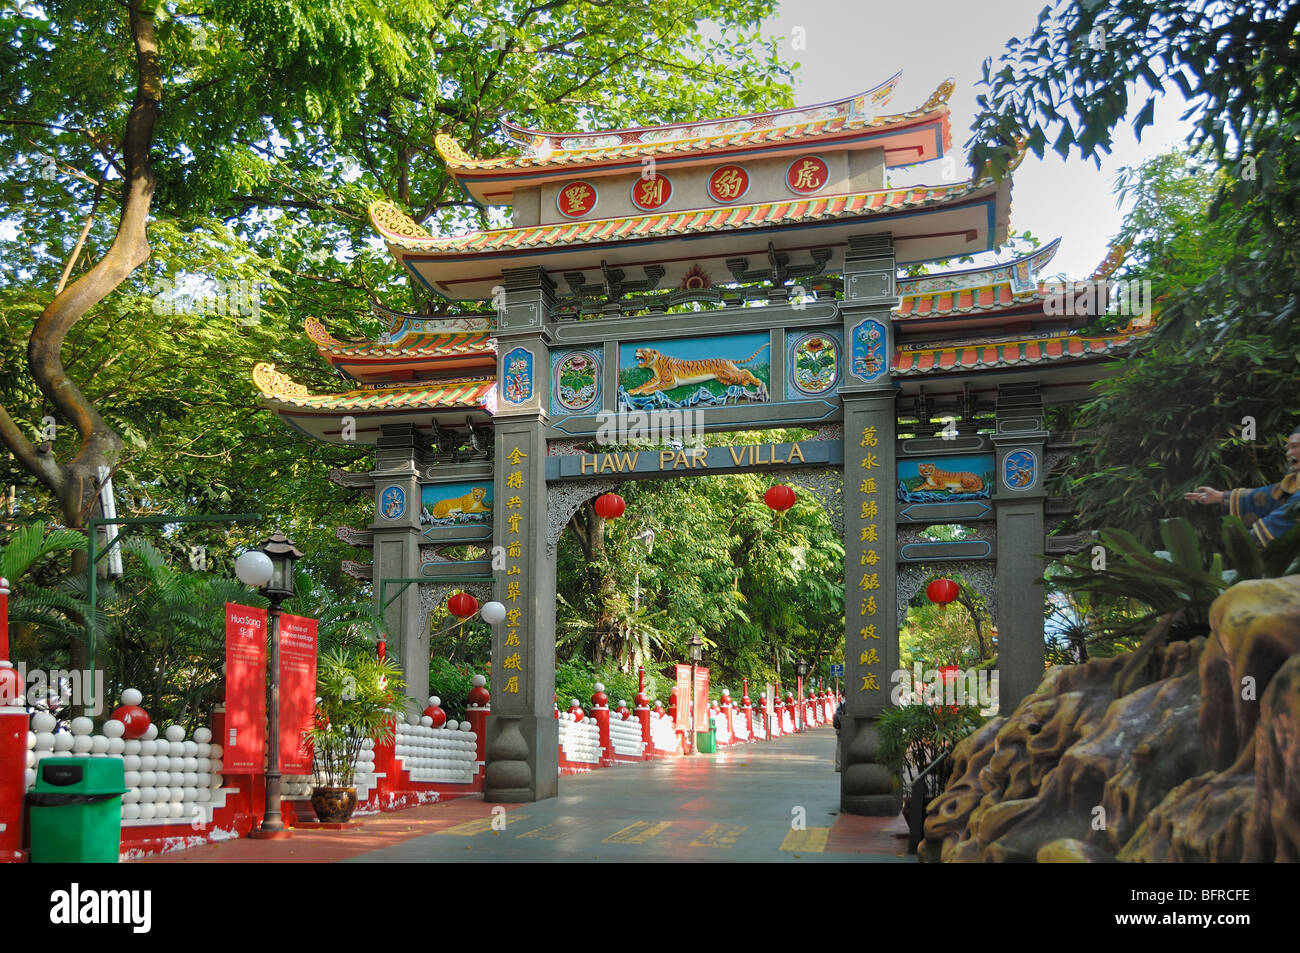 Chinese Entrance Gate to the Tiger Balm Gardens Theme Park, or Haw Par Villa, Singapore Stock Photo